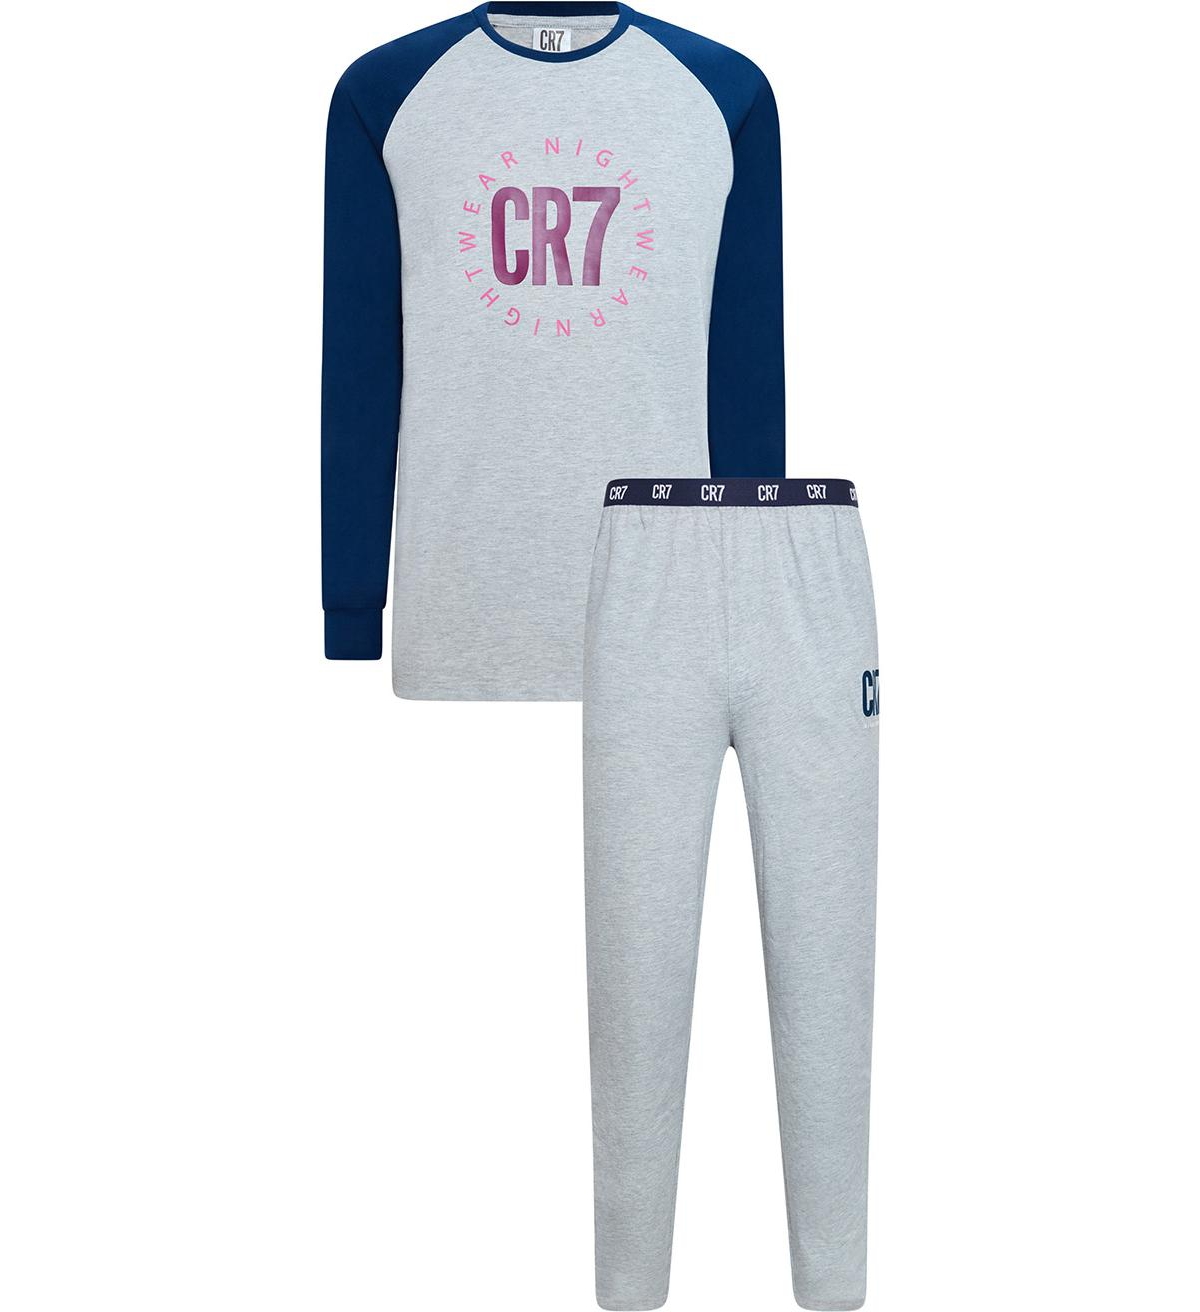 Men's Cotton Loungewear Top and Pant Set - Gray, Blue, Pink